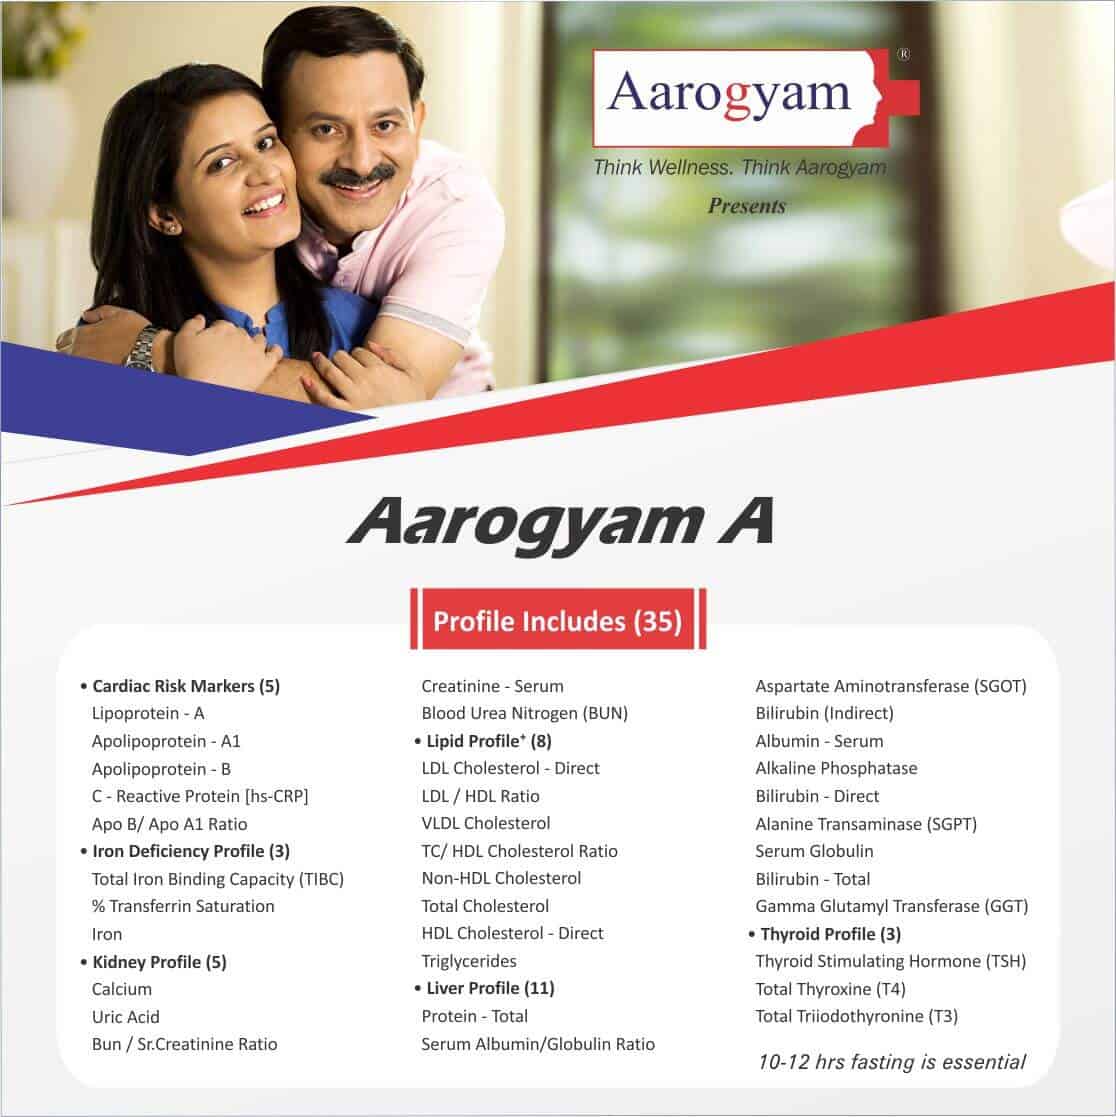 Aarogyam-A